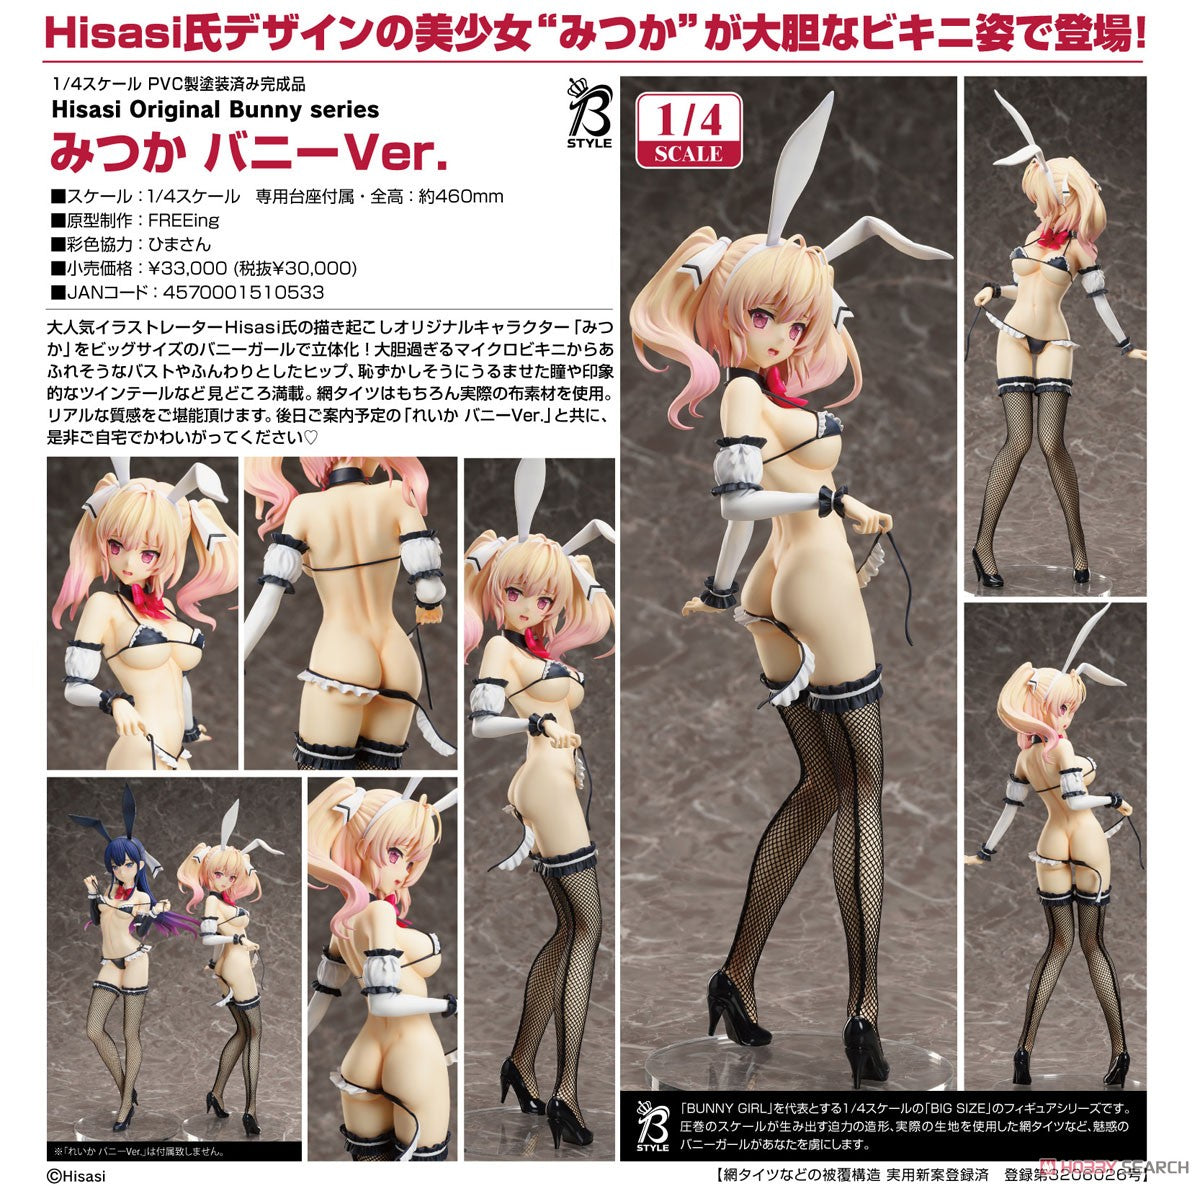 NEW Hisasi Original Bunny Series Mitsuka: Bunny Version